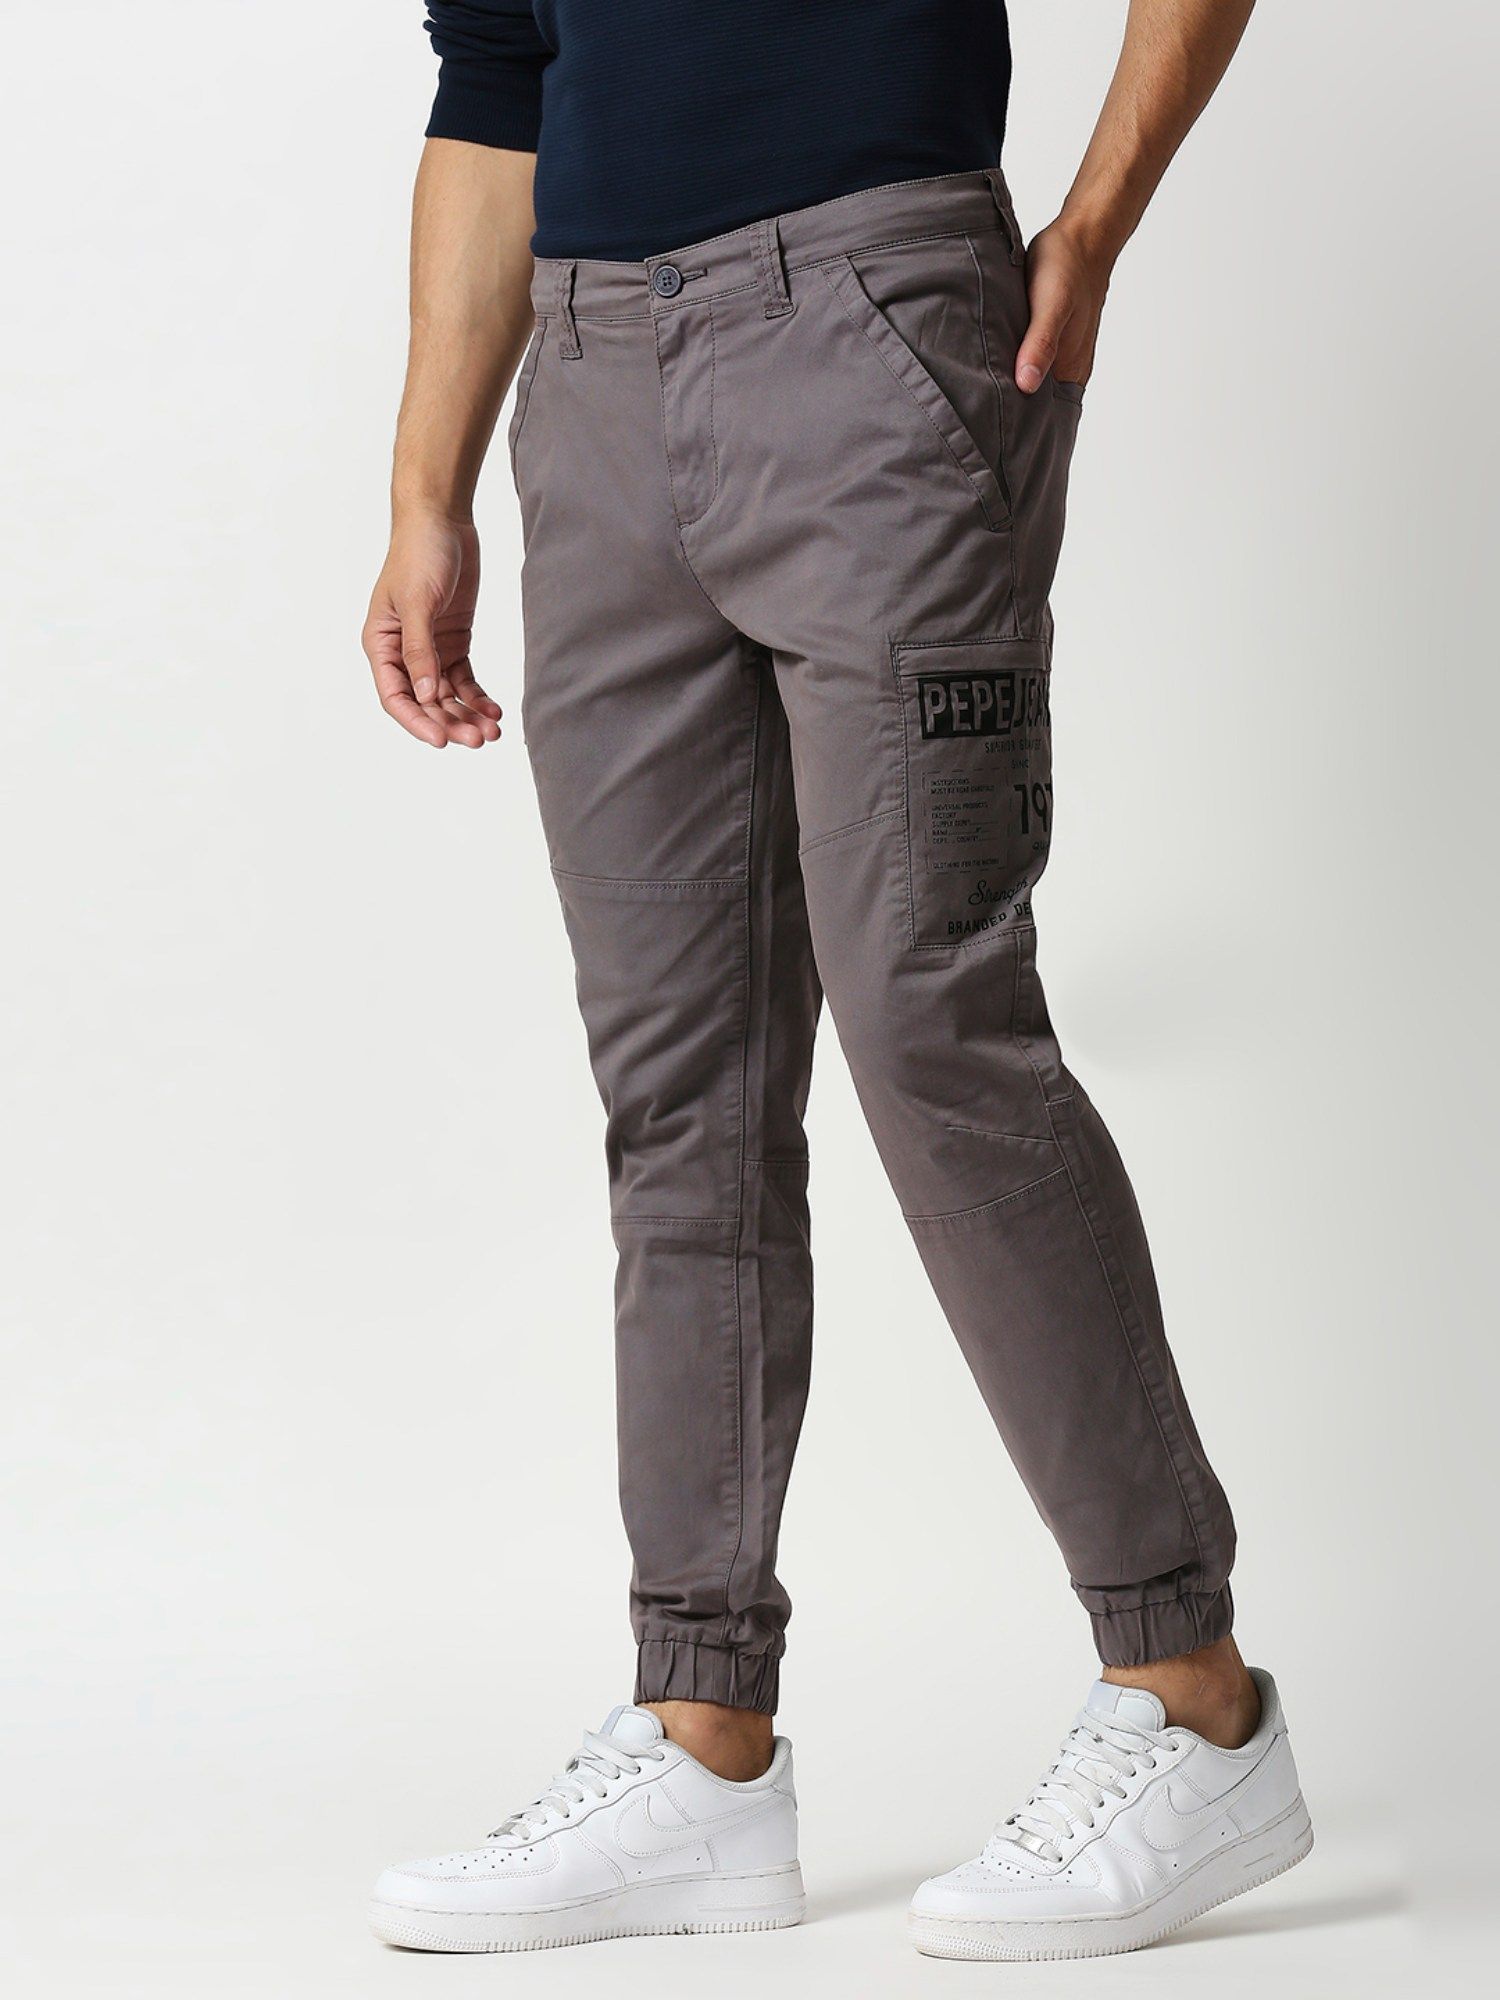 Pepe Jeans Men's Jared 32 Cargo Trousers PN: PM2114862 | eBay